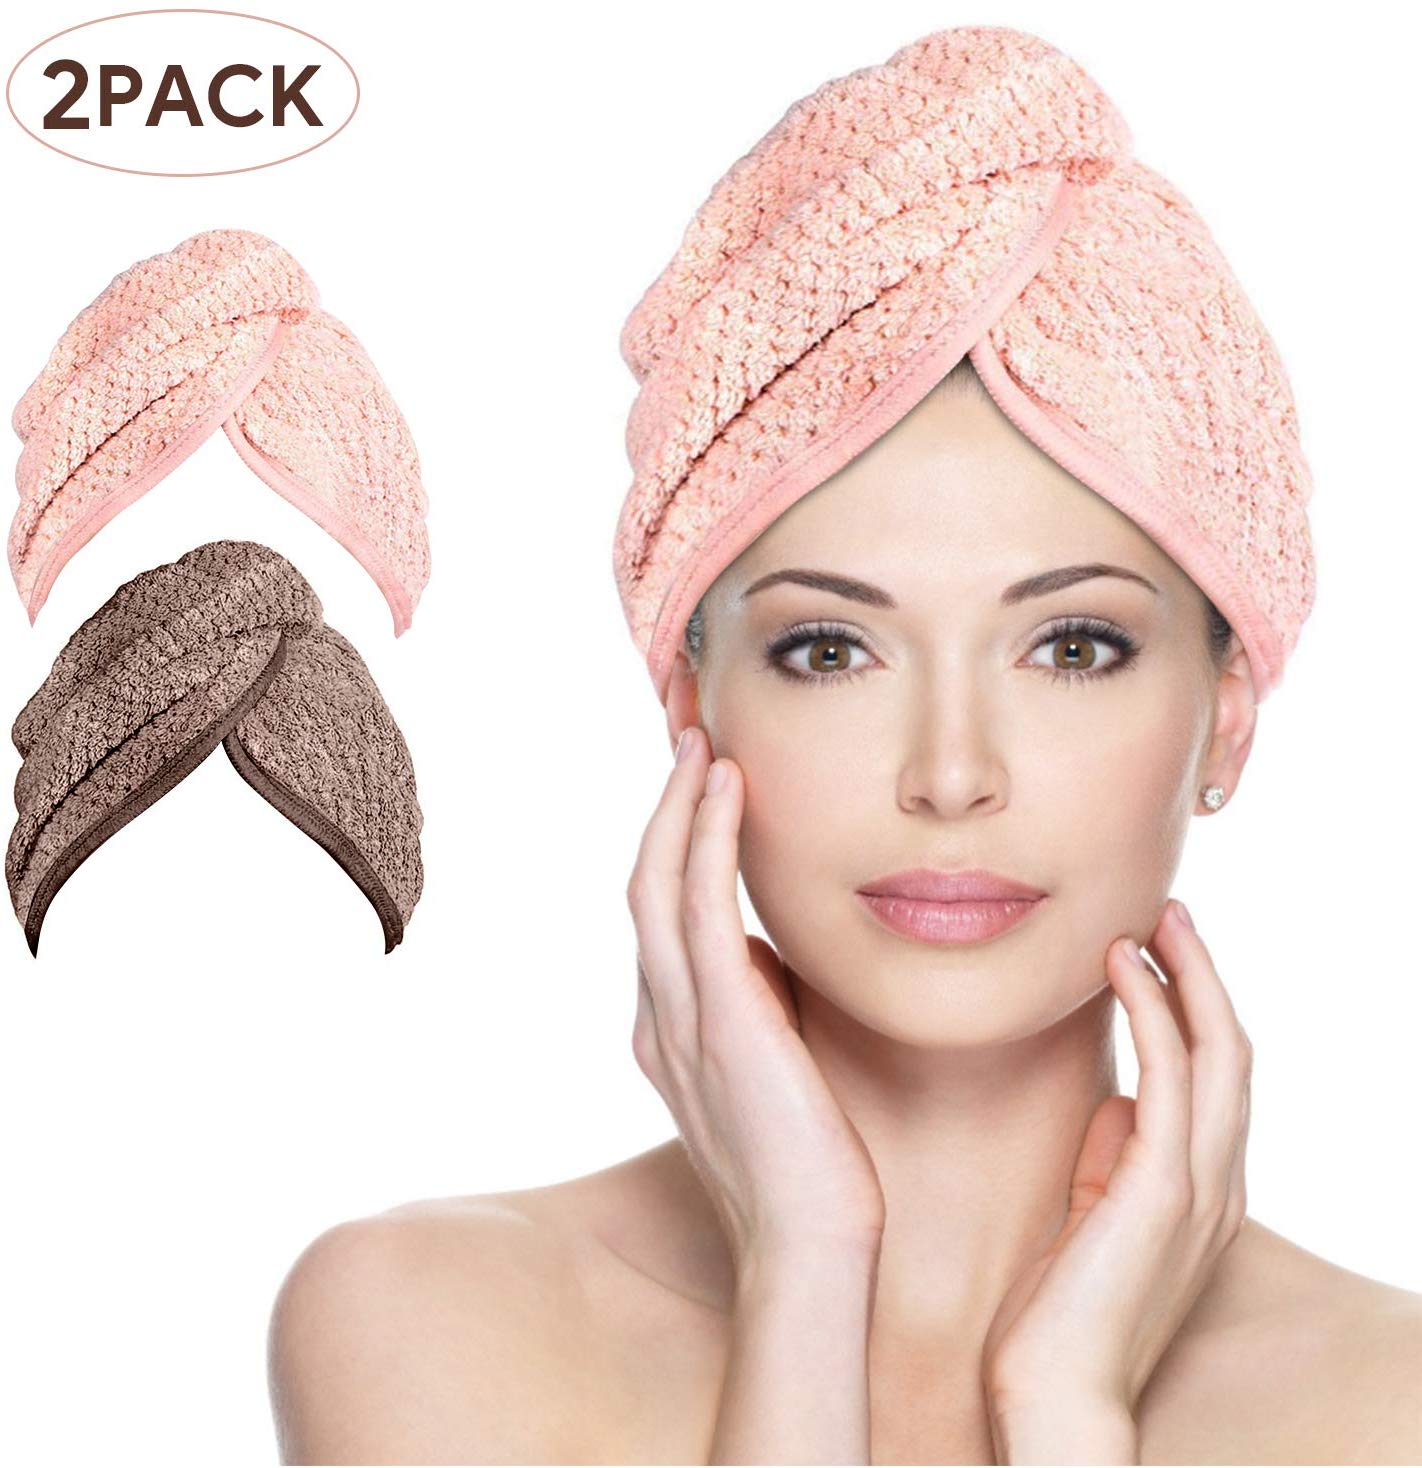 2 Trockn Handtuch Haar Turban Damen Haarpflege Kopftuch Kopfhandtuch Trockentuch 